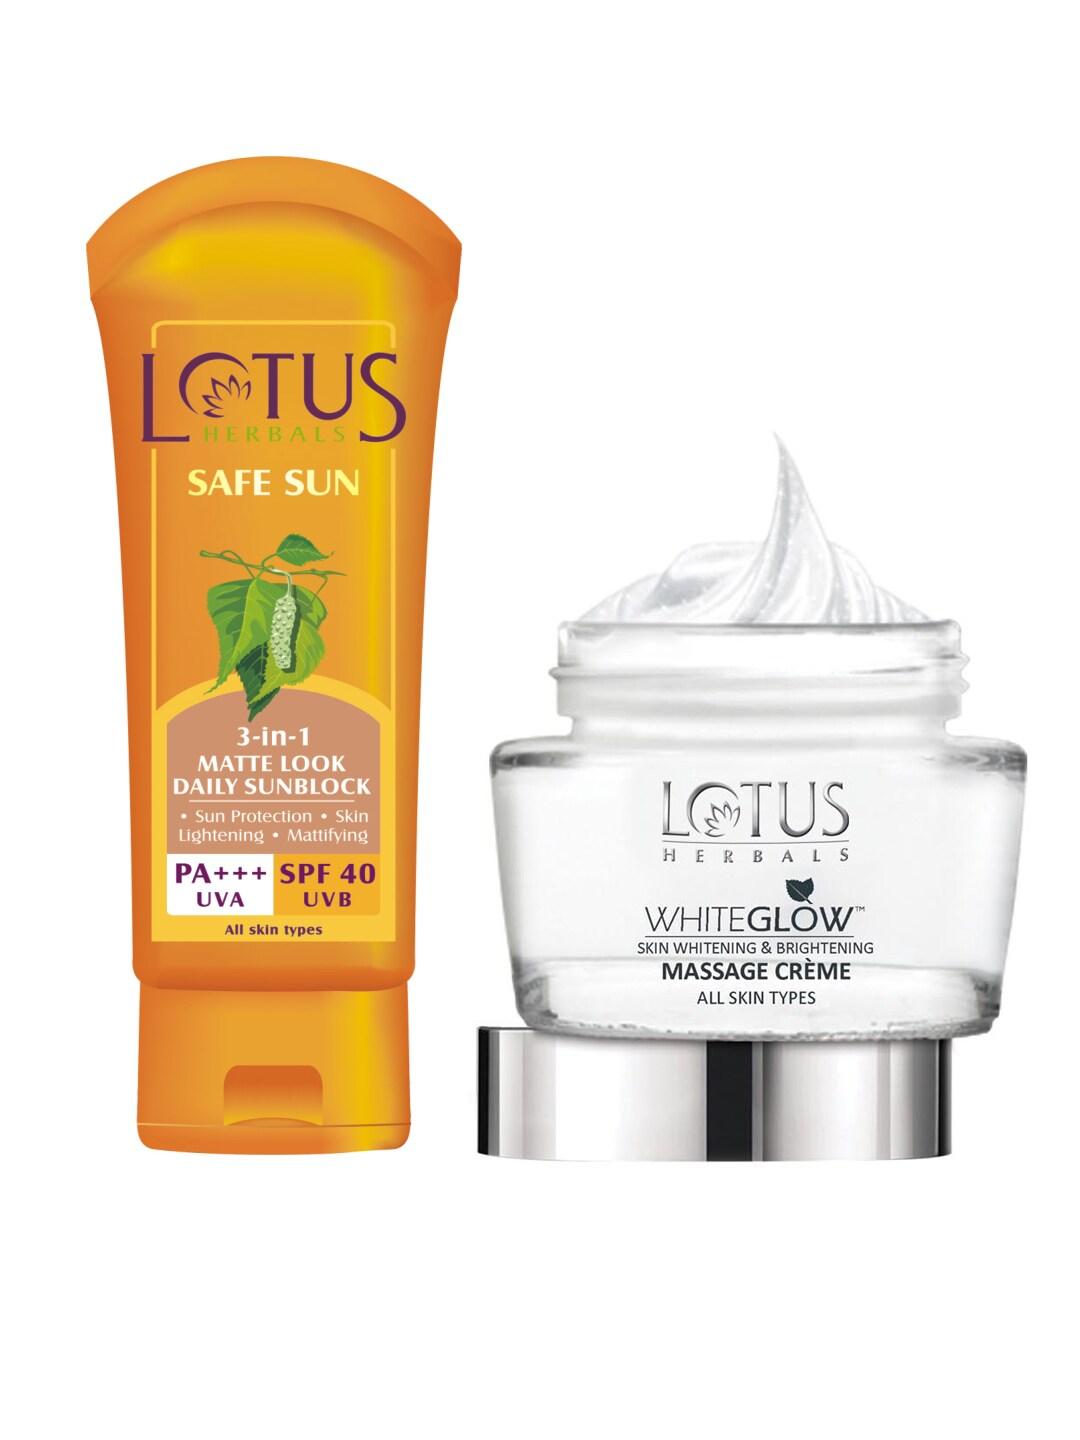 Lotus Herbals Safe Sun Sunscreen & Whiteglow Skin Whitening & Brightening Massaging Cream